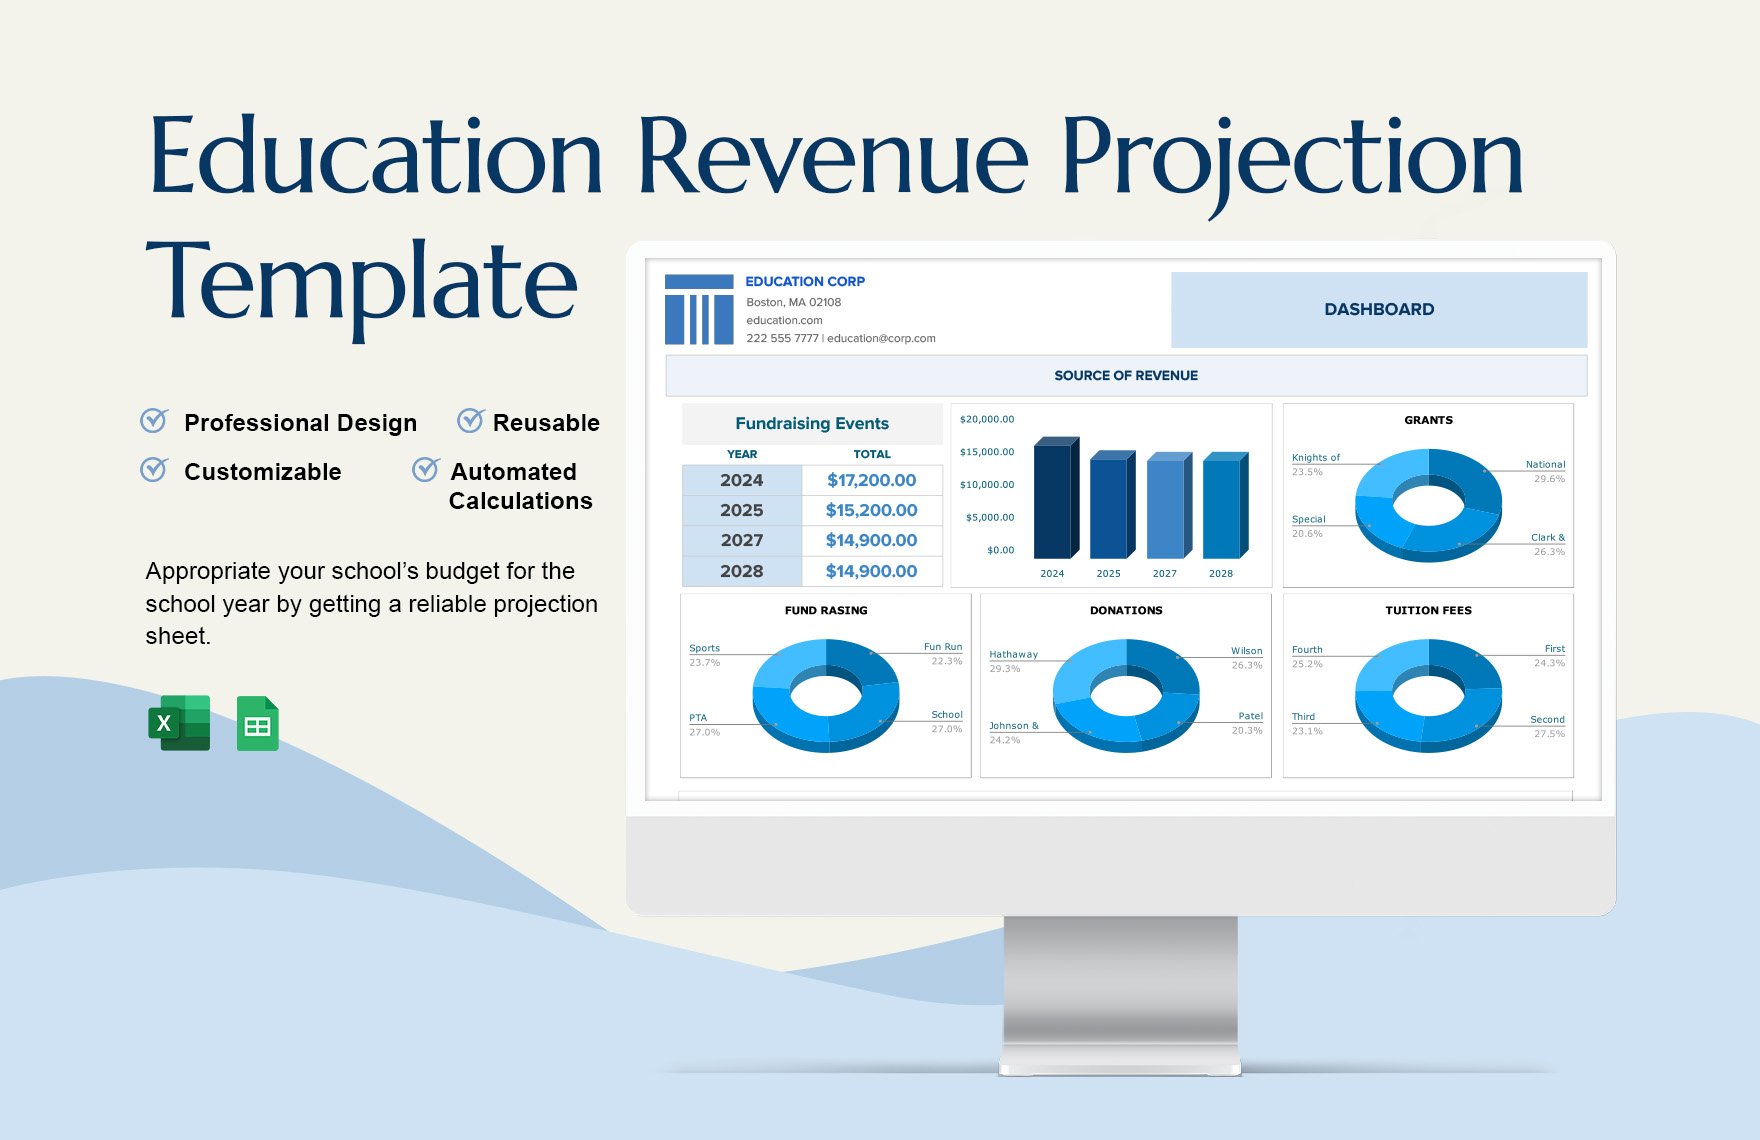 Education Revenue Projection Template